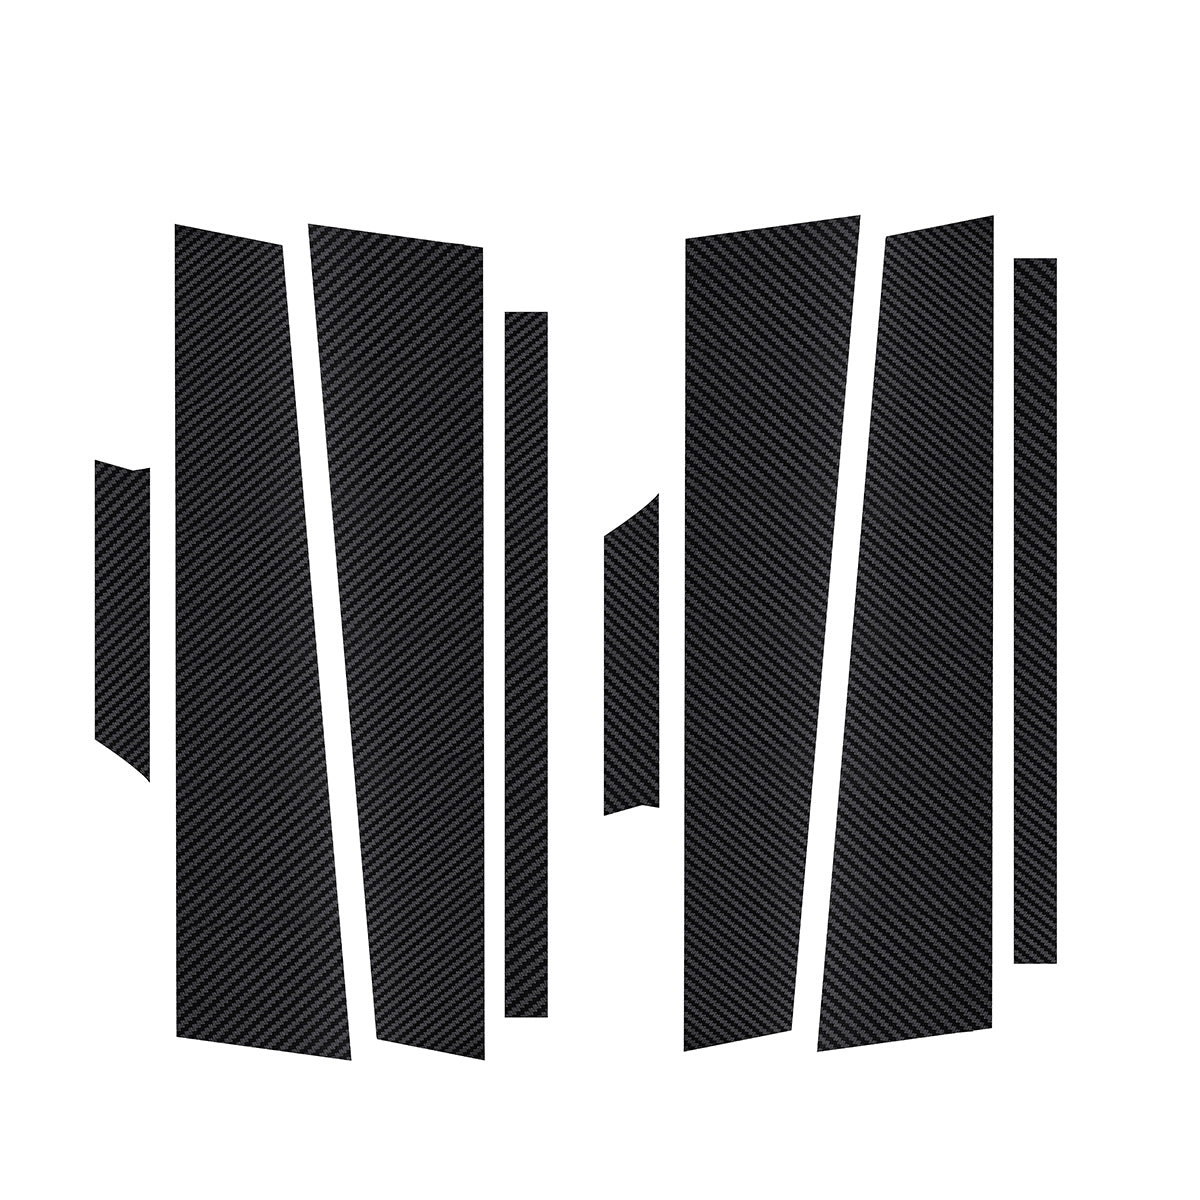 Dark Slate Gray 3D 5D Carbon Fiber Style A/B/C Pillar Film Sticker Decals Trim For VW MK7 Golf 7